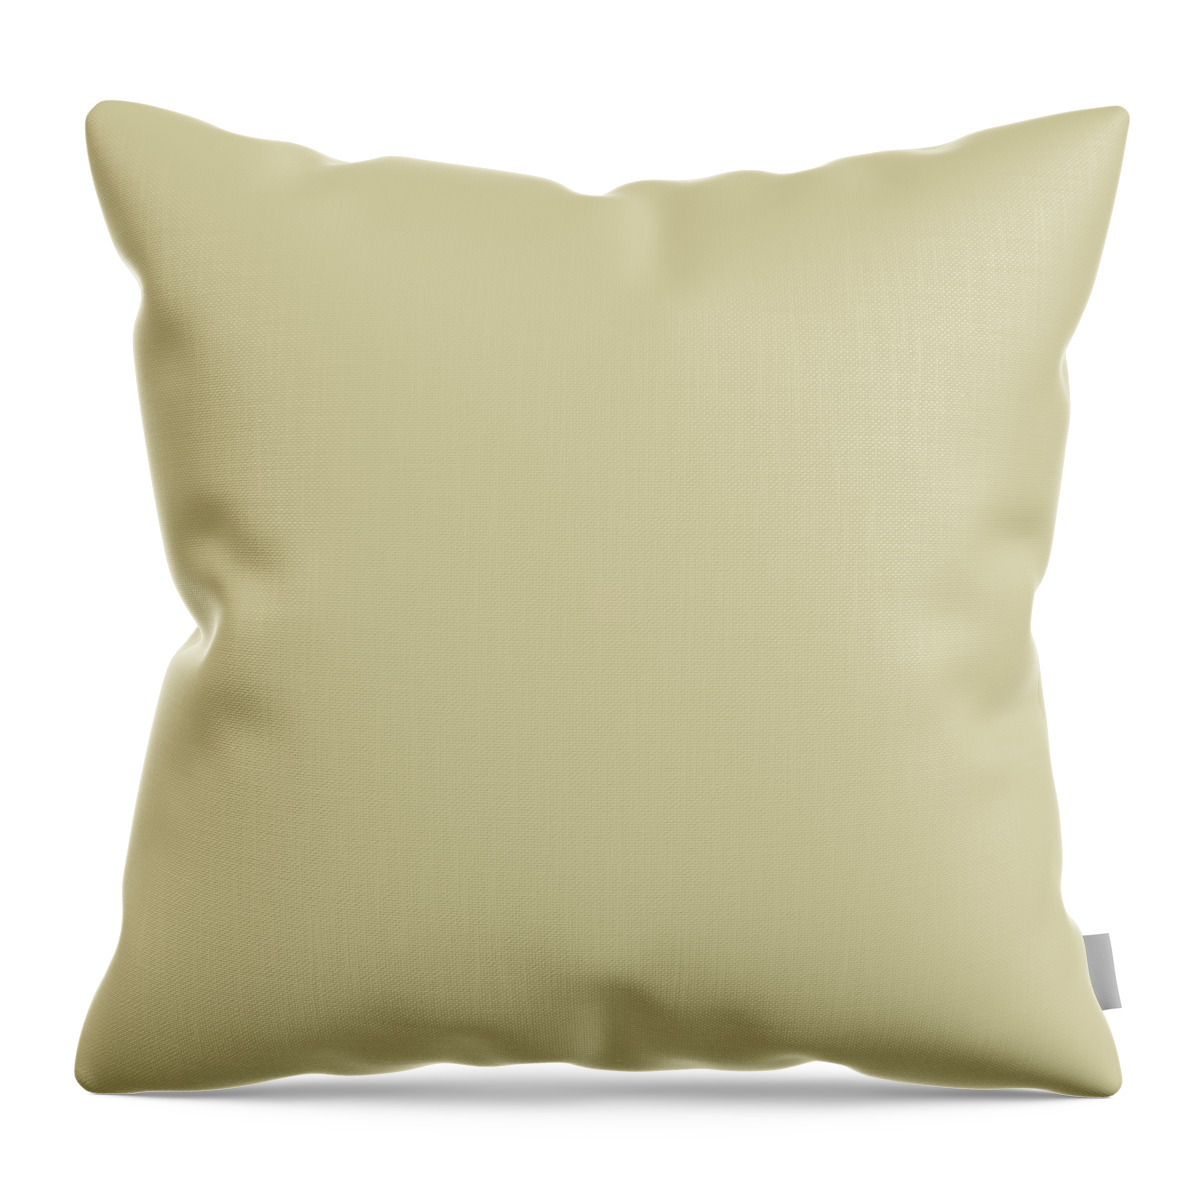 Wasabi Zing Throw Pillow featuring the digital art Wasabi Zing by TintoDesigns